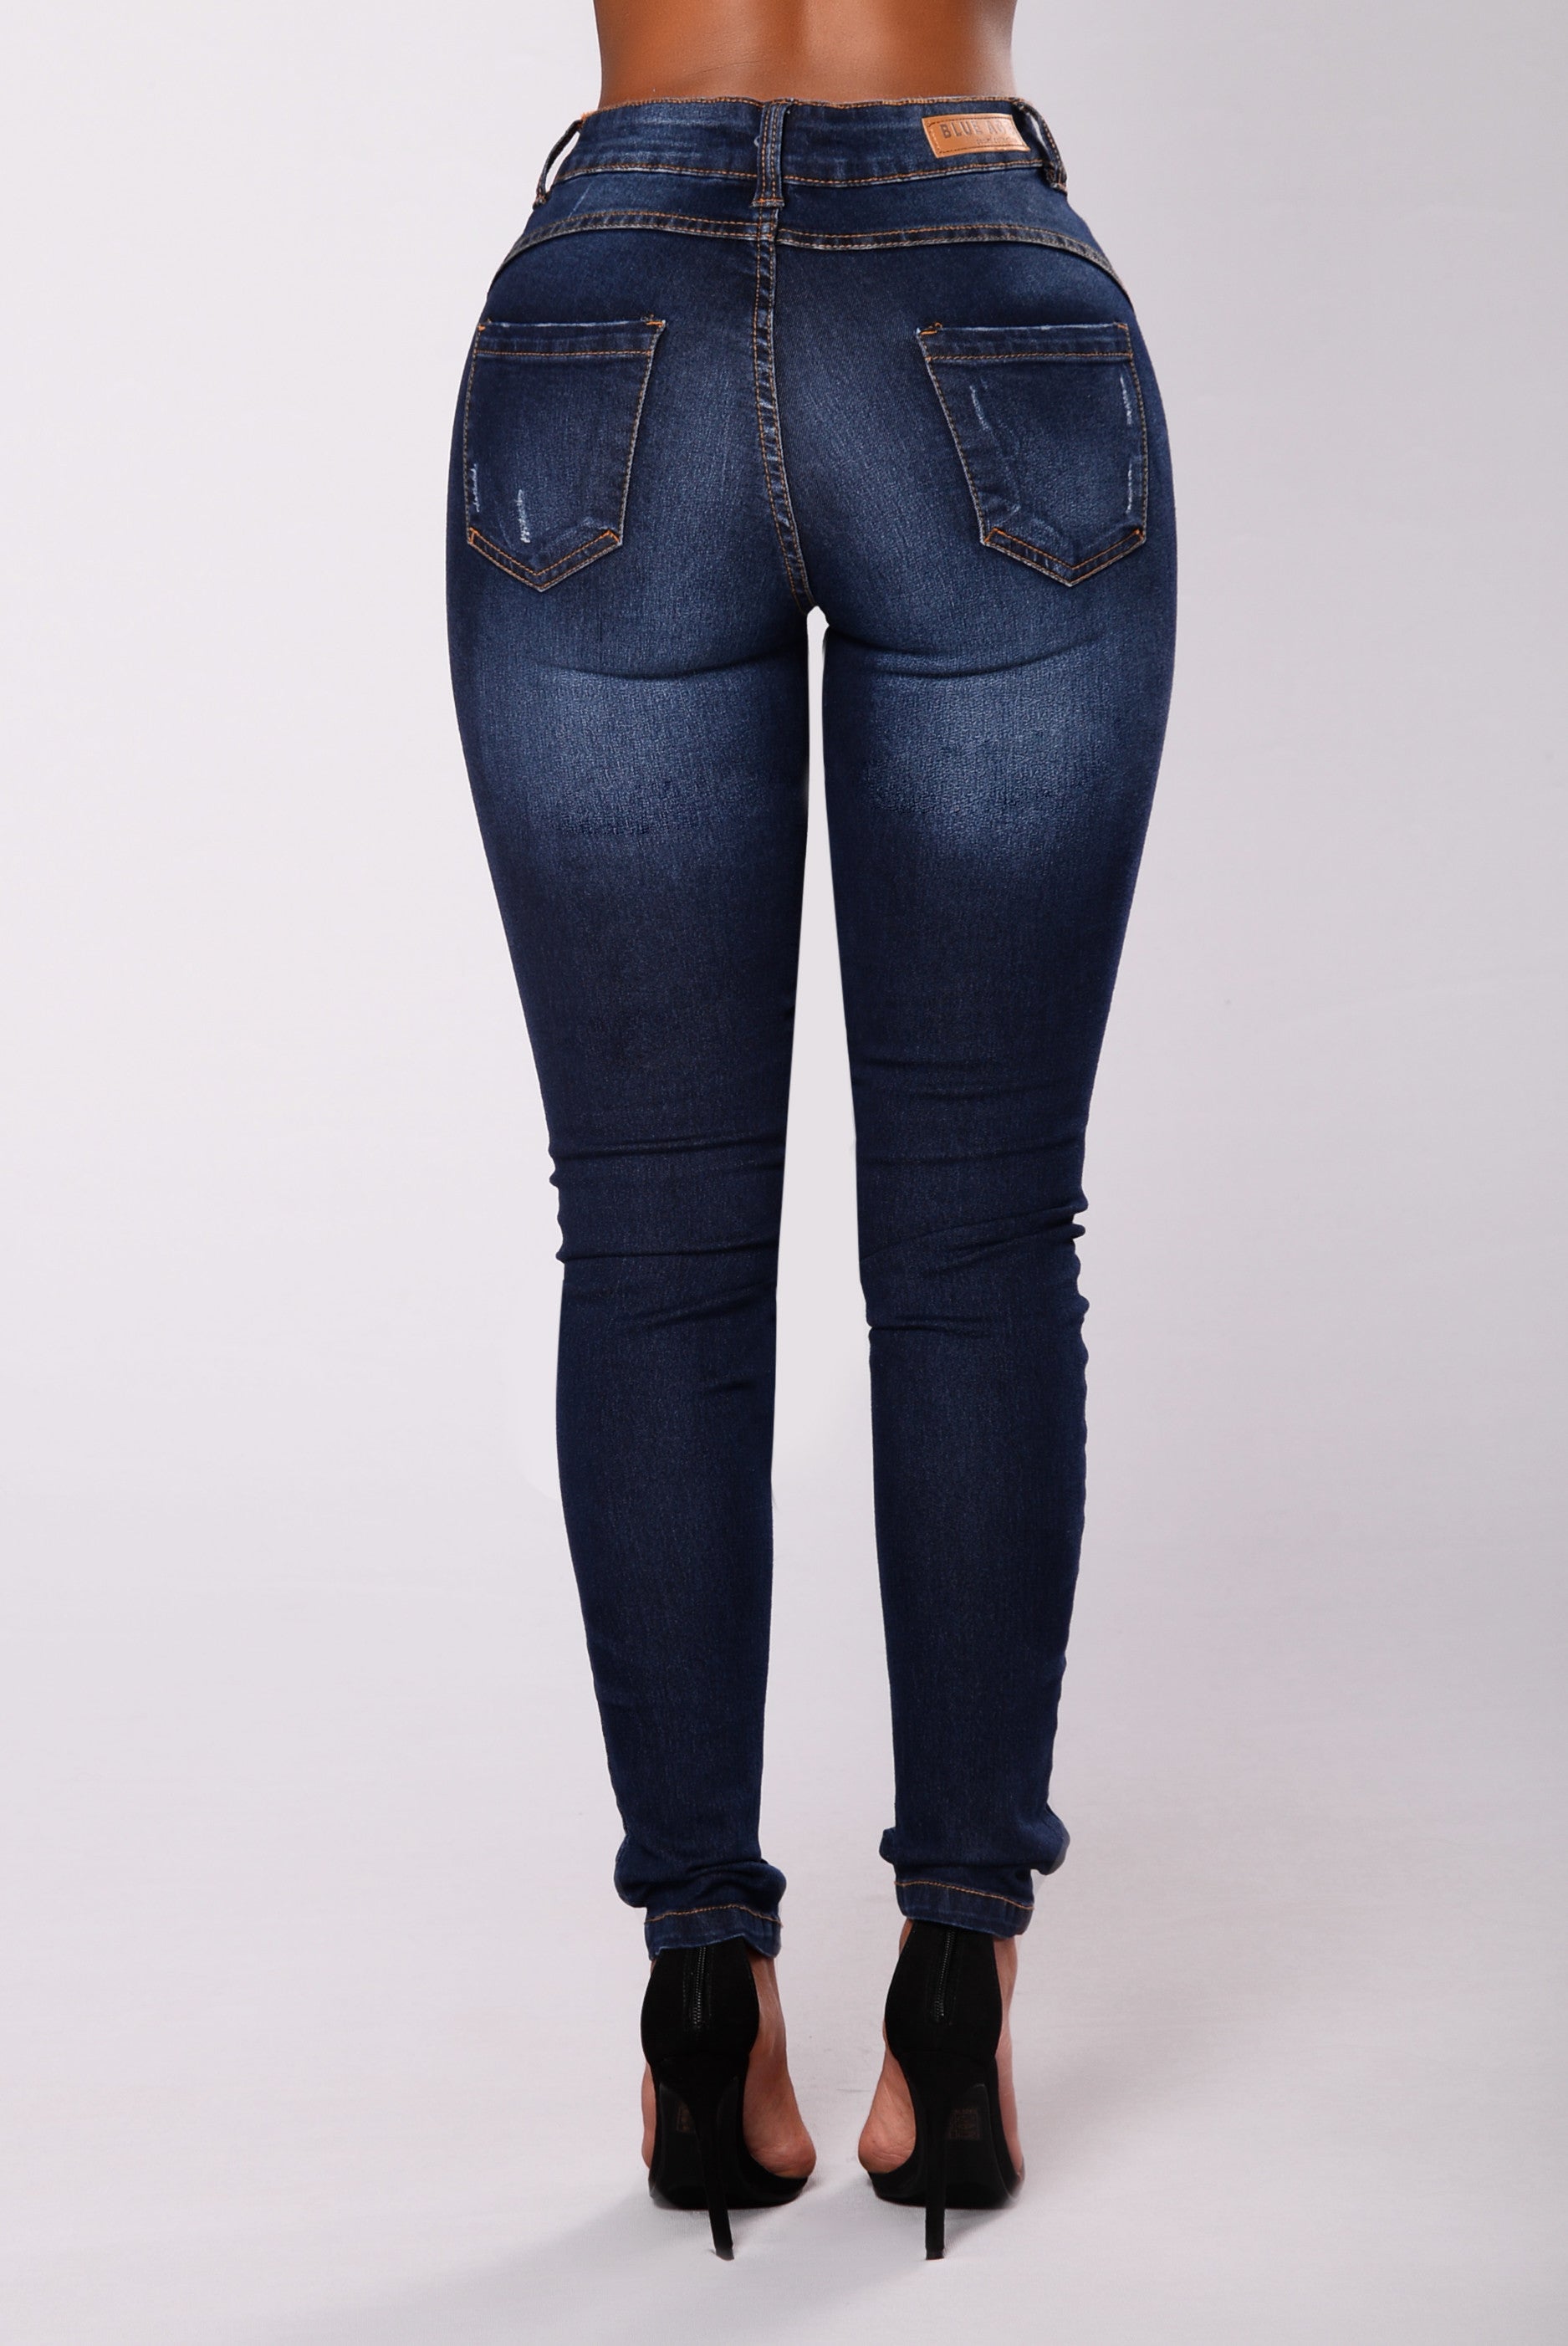 Extra Luv Booty Sculptin Jeans - Dark Denim – Fashion Nova